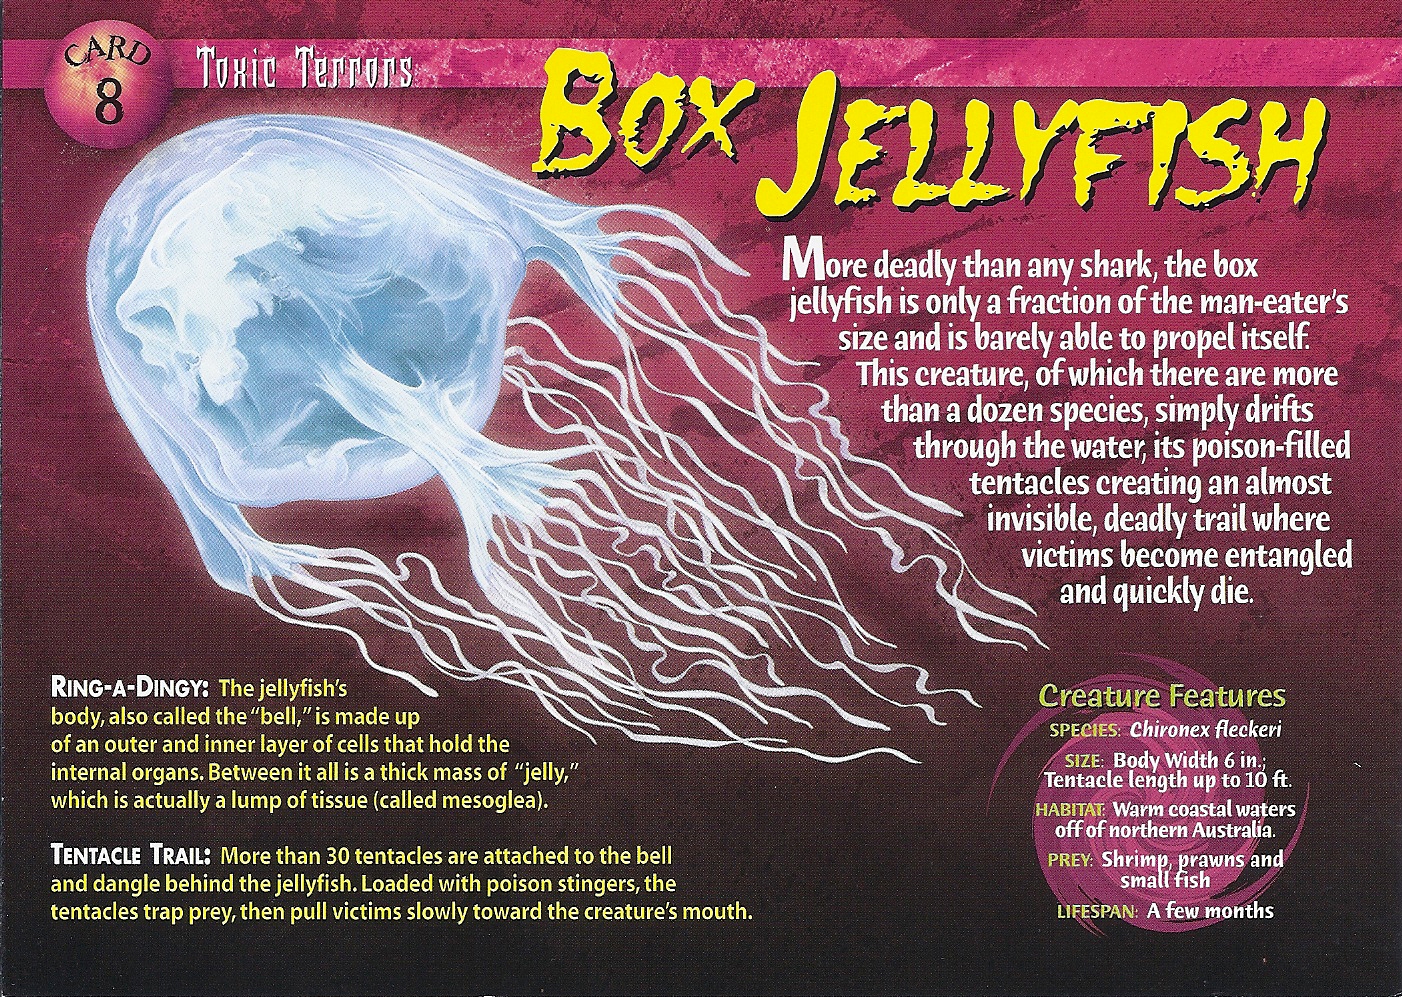 a box jellyfish